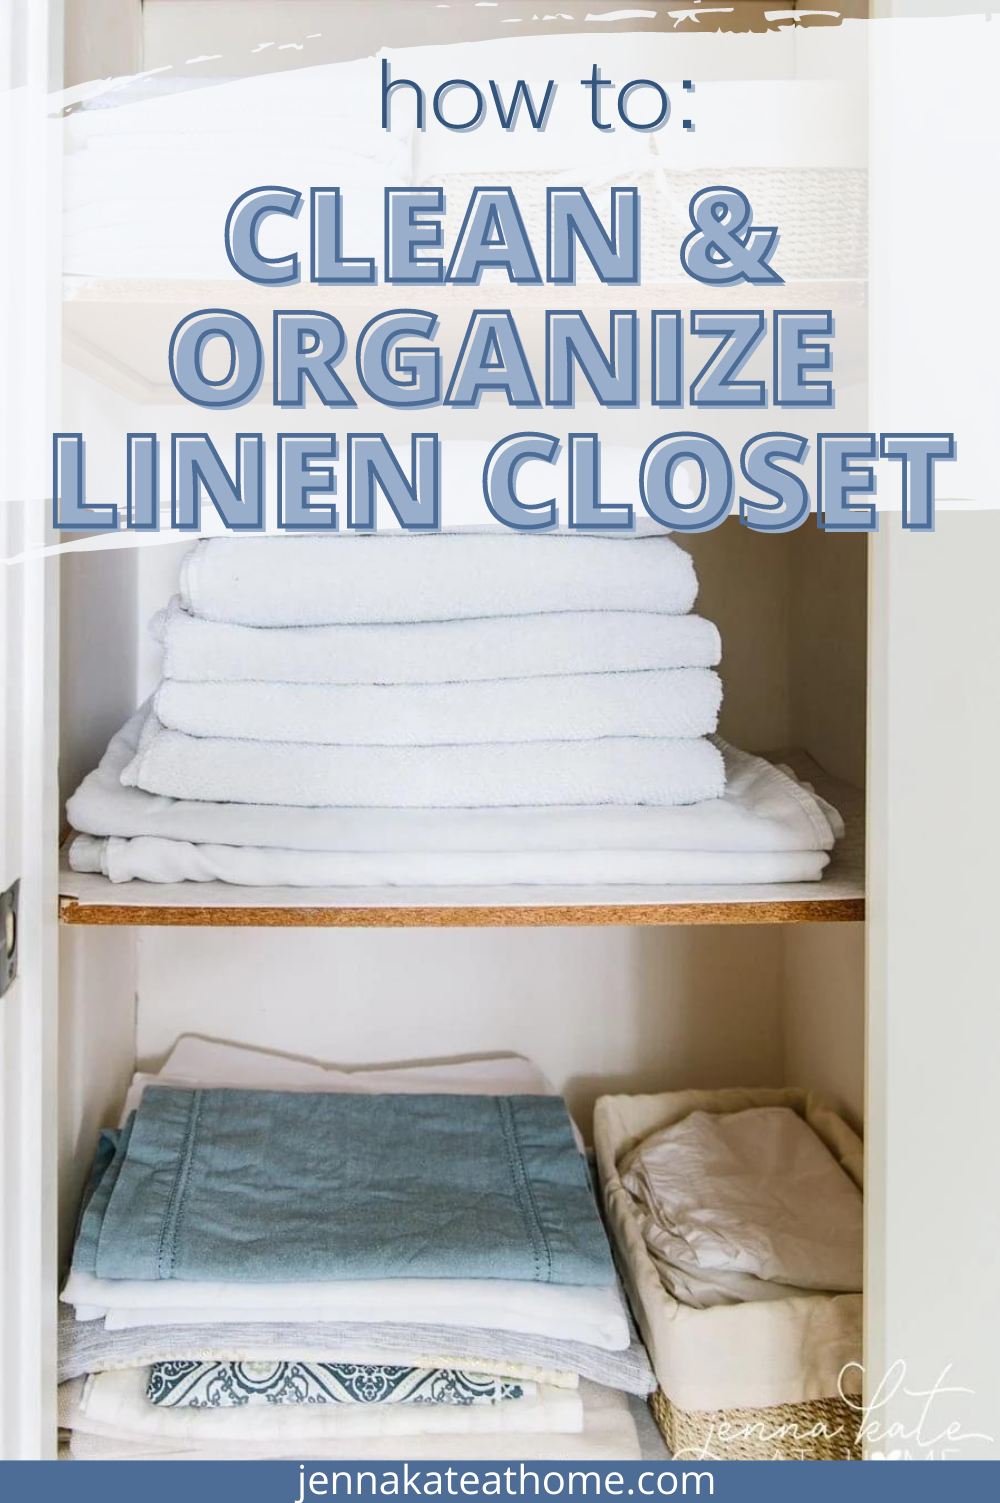 Linen Closet and Broom Closet Organization - Jenna Kate at Home